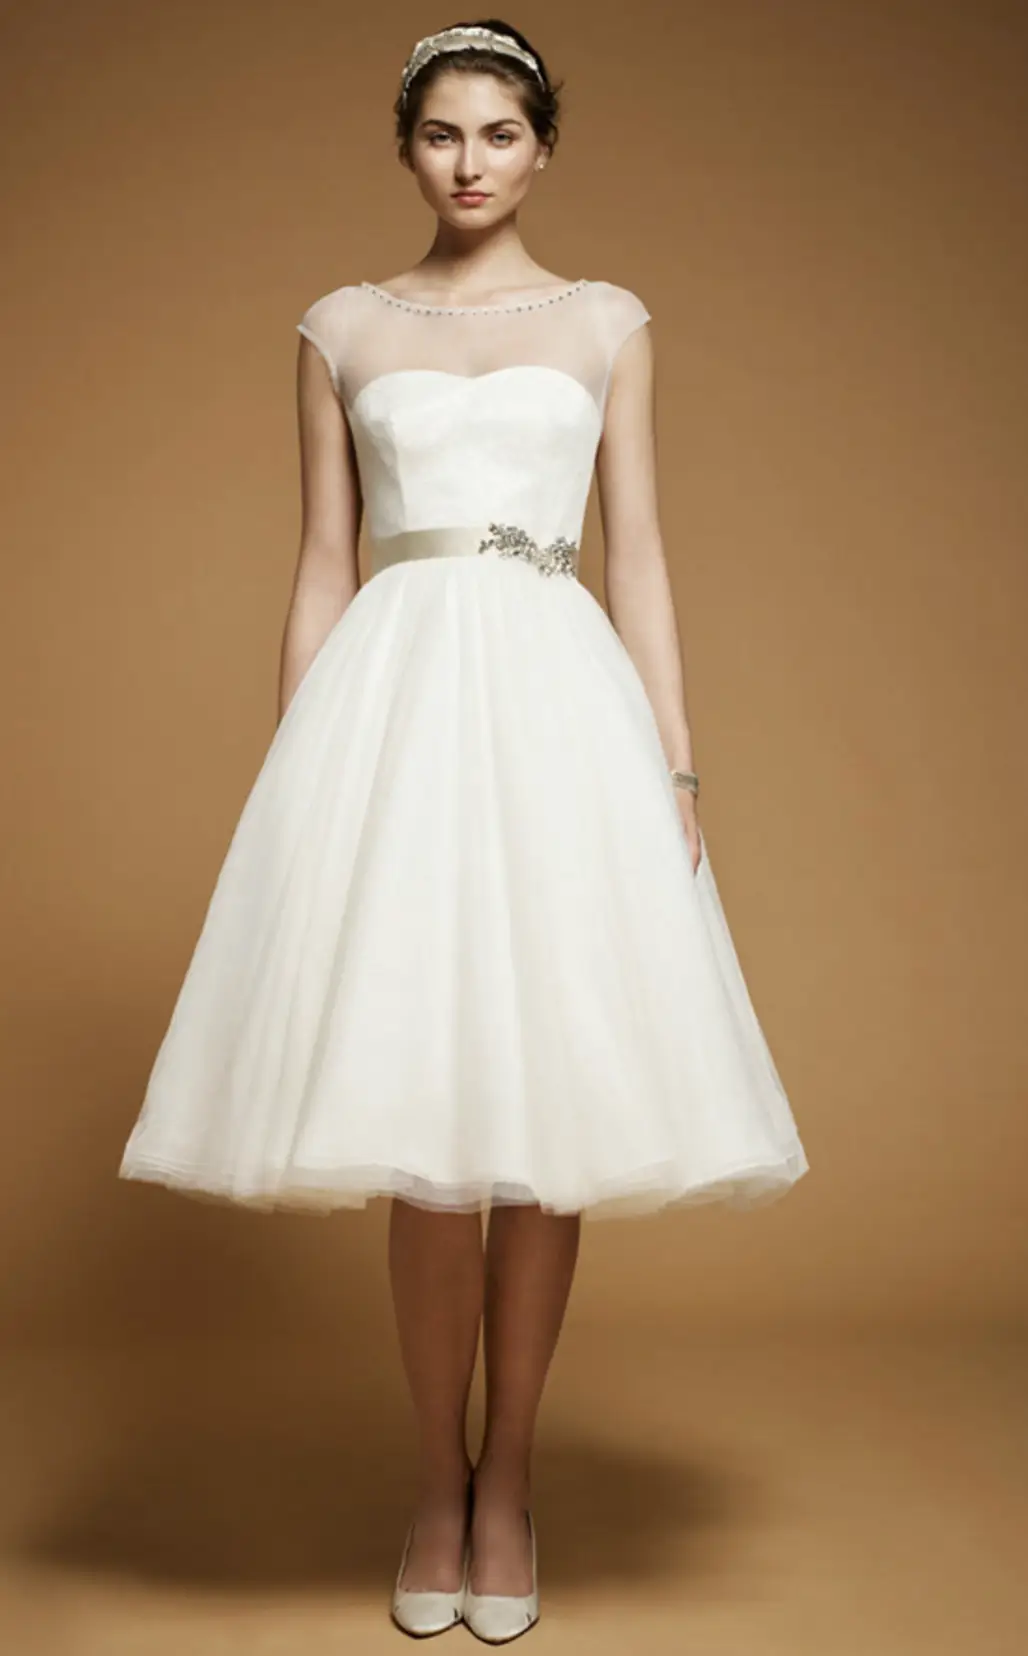 Short Wedding Gown Trend...